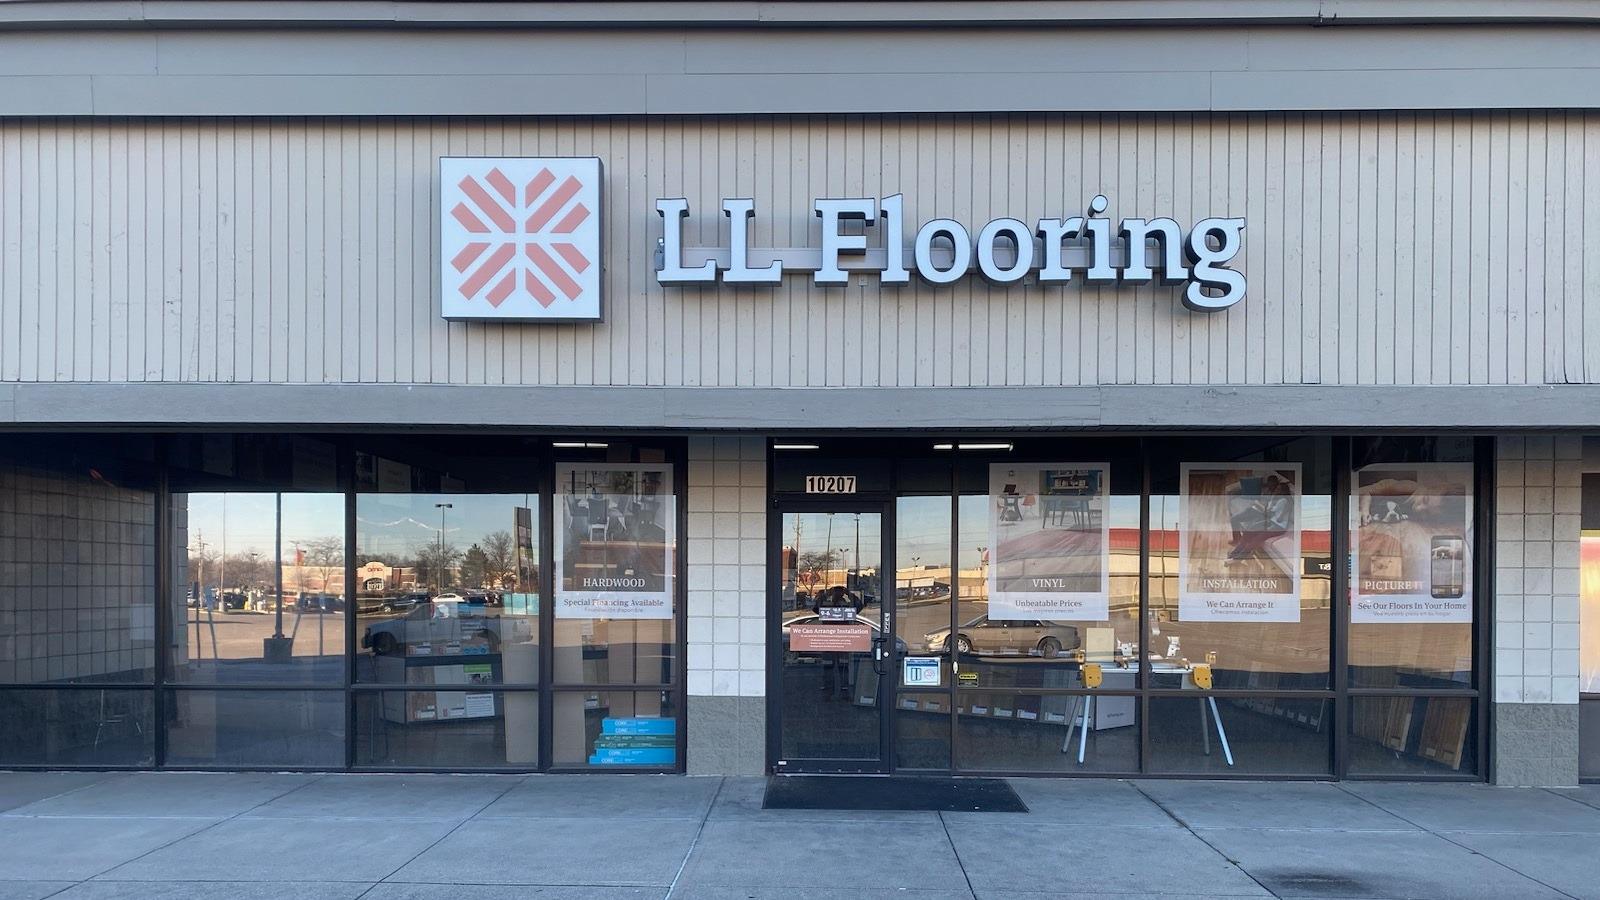 LL Flooring #1370 East Indianapolis | 10207 East Washington Street | Storefront LL Flooring Indianapolis (317)762-2341